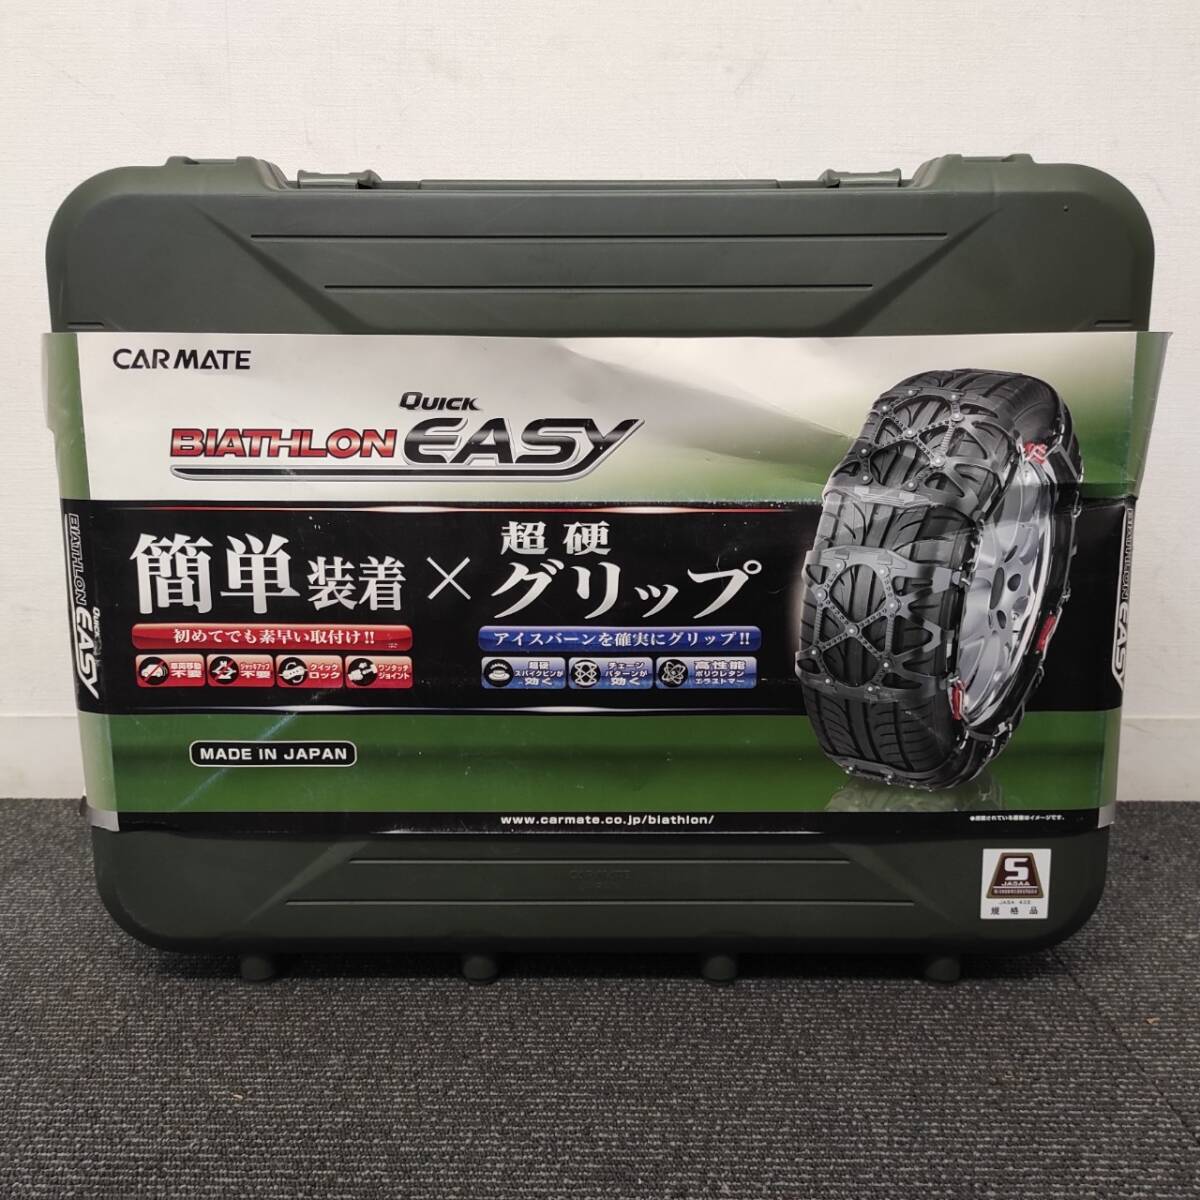 Y615-K51-762 CARMATE Carmate BIATHLON bias long Quick EASY QE12 tire chain car goods case attaching made in Japan 